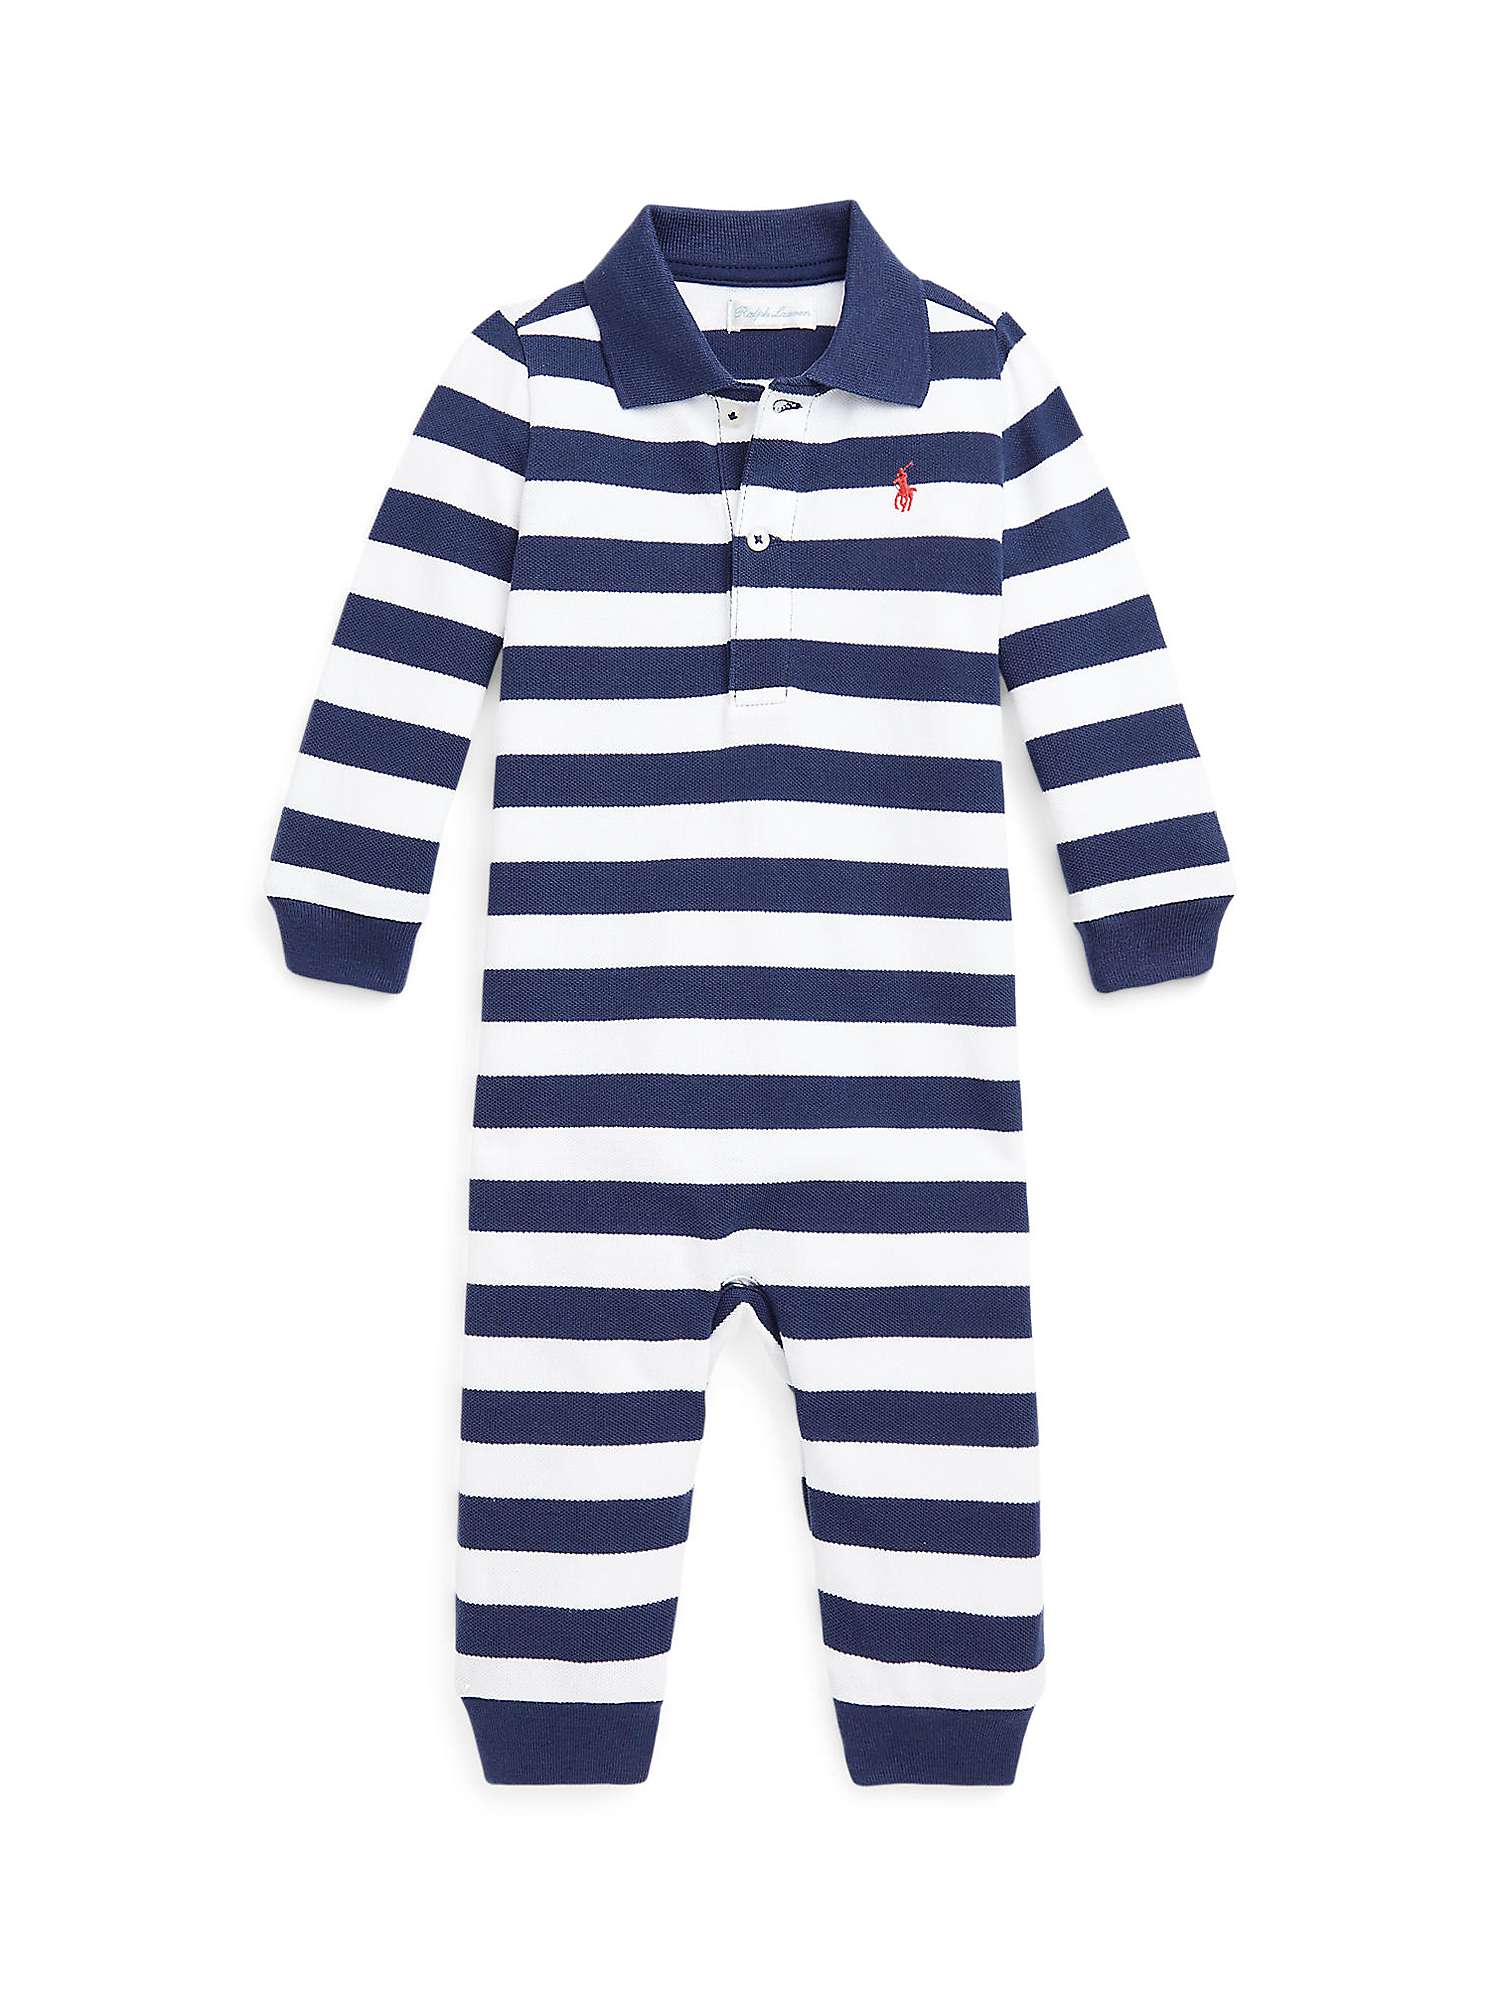 Buy Ralph Lauren Baby Stripe Long Sleeve Romper, Rustic Navy/White Online at johnlewis.com